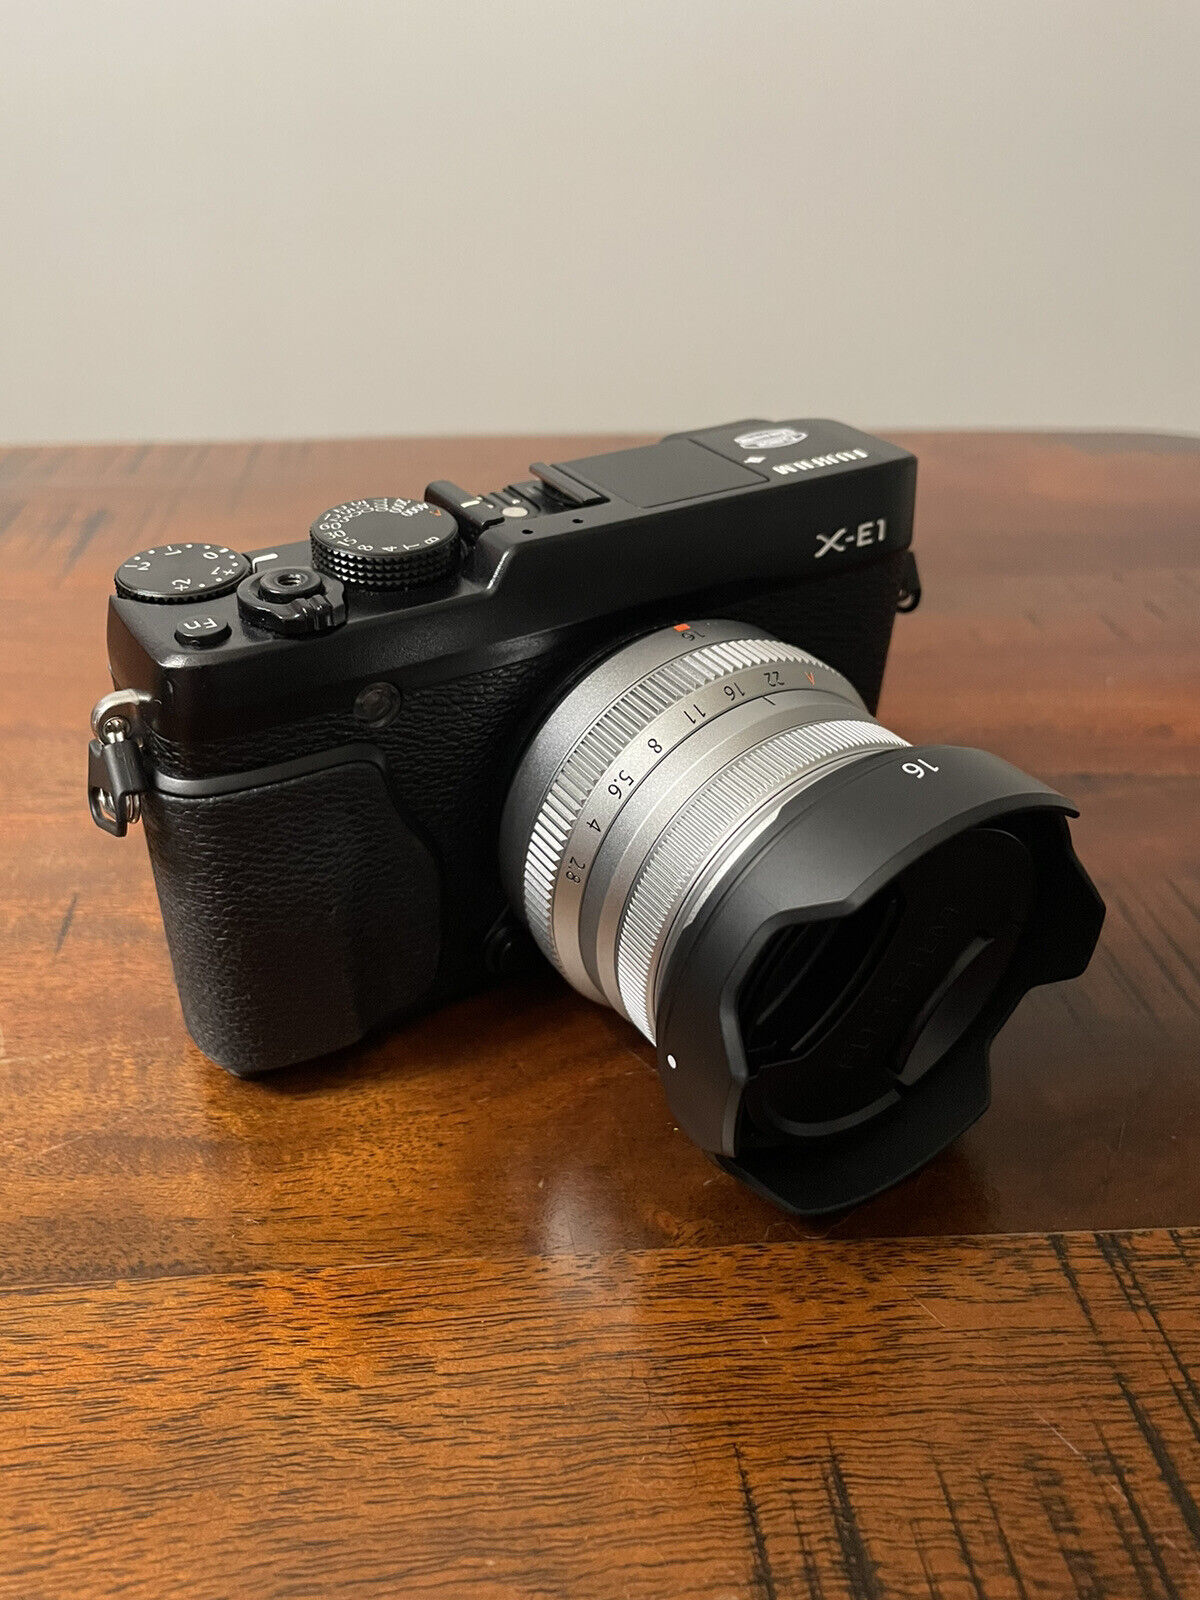 Fujifilm X-E1 16.3MP Digital SLR Camera with 16mm XF F2.8 Lens.